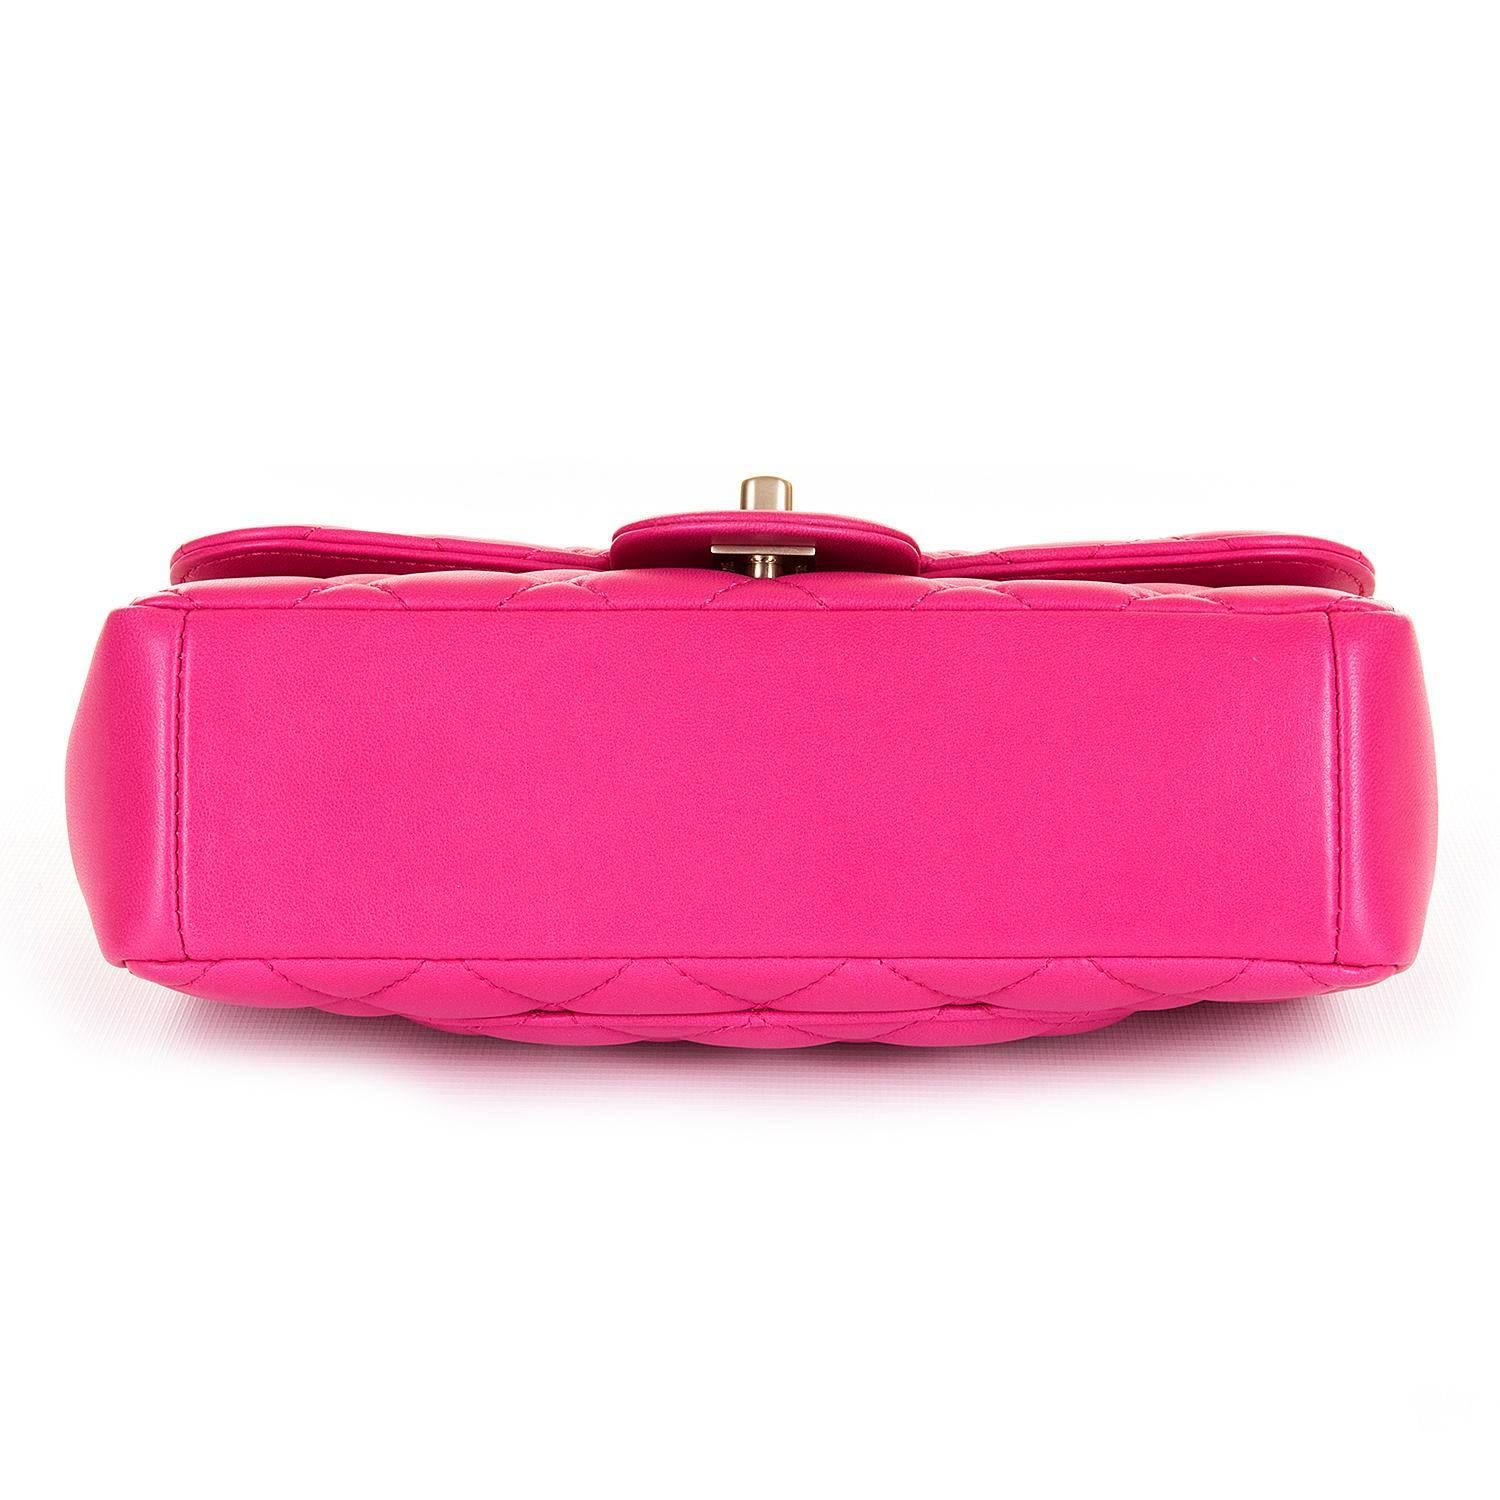 Pristine Chanel Lipstick Pink 'Chic Quilt' Shoulder Bag with Satin Gold Hardware 1